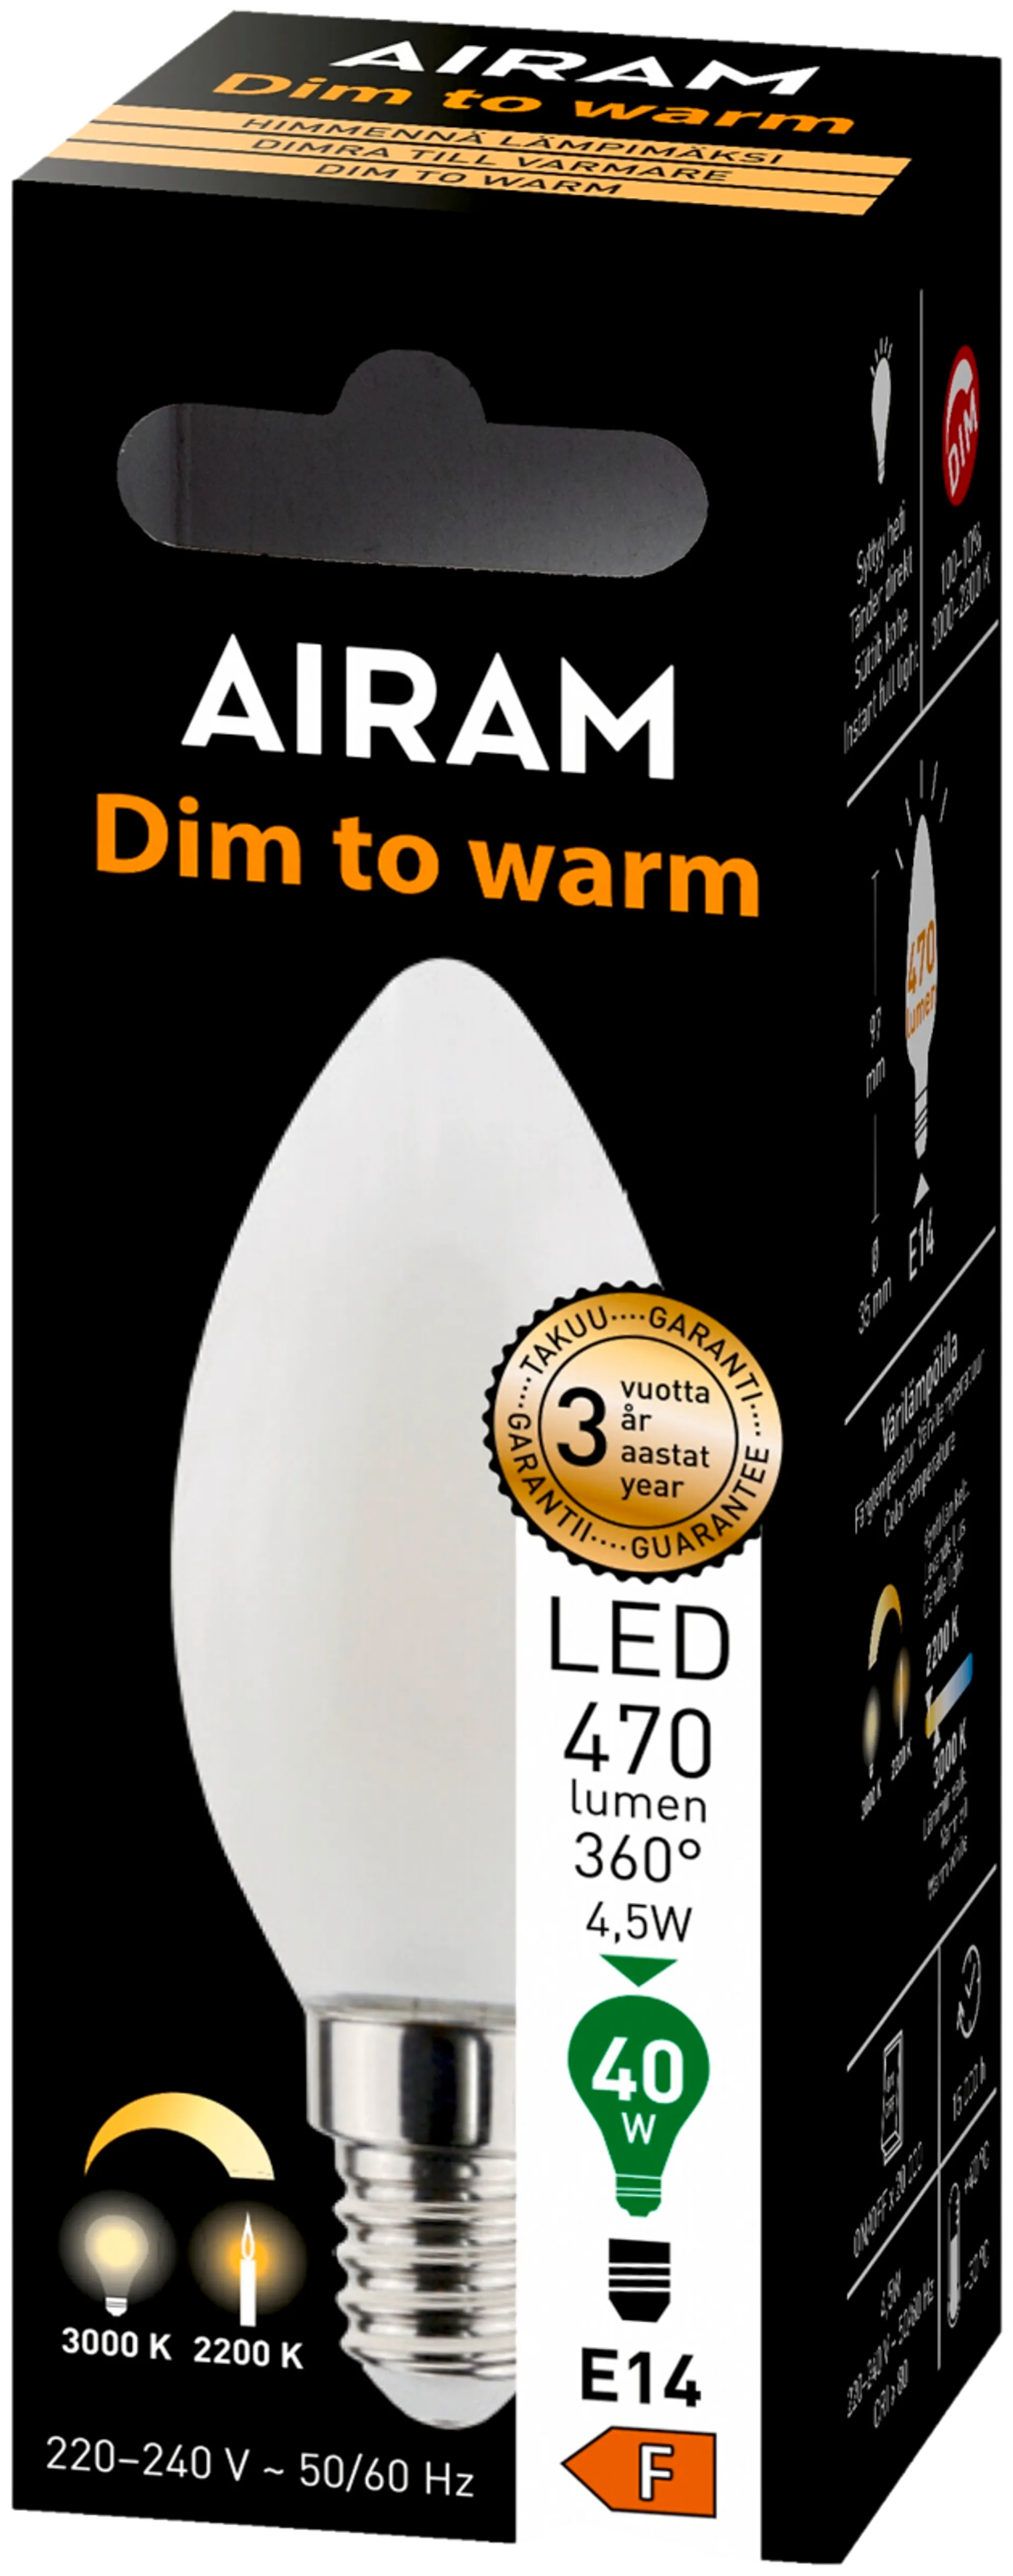 Airam LED kynttilä dim to warm 4,5W 470lm E14 - 2